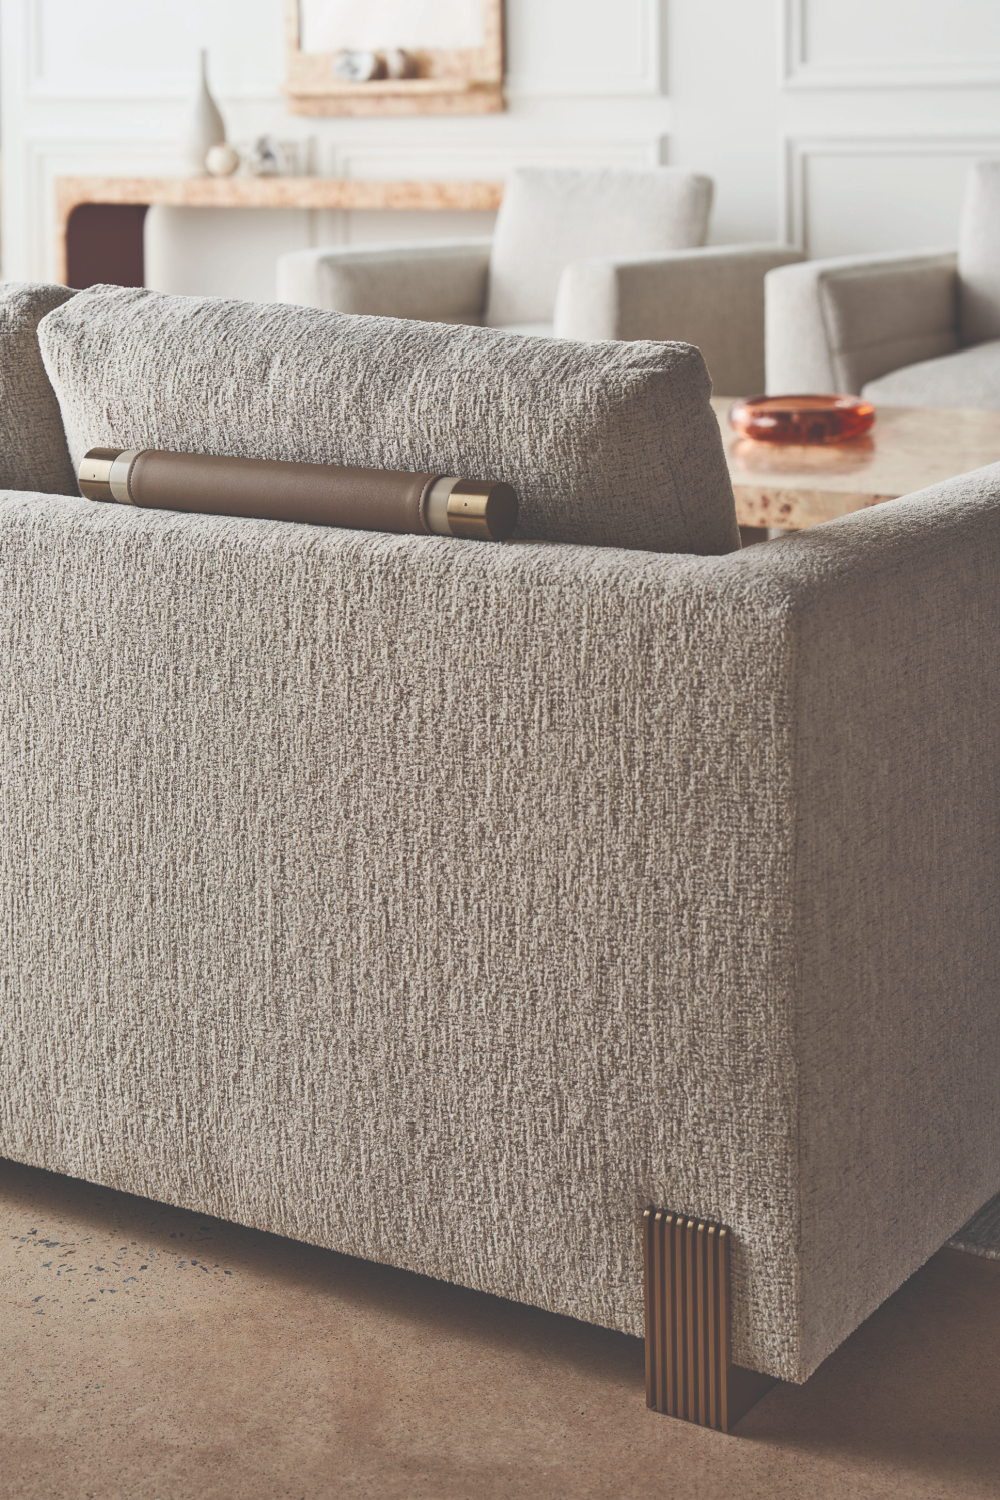 Neutral Toned Modern Sofa | Caracole Counter Balance | Oroa.com